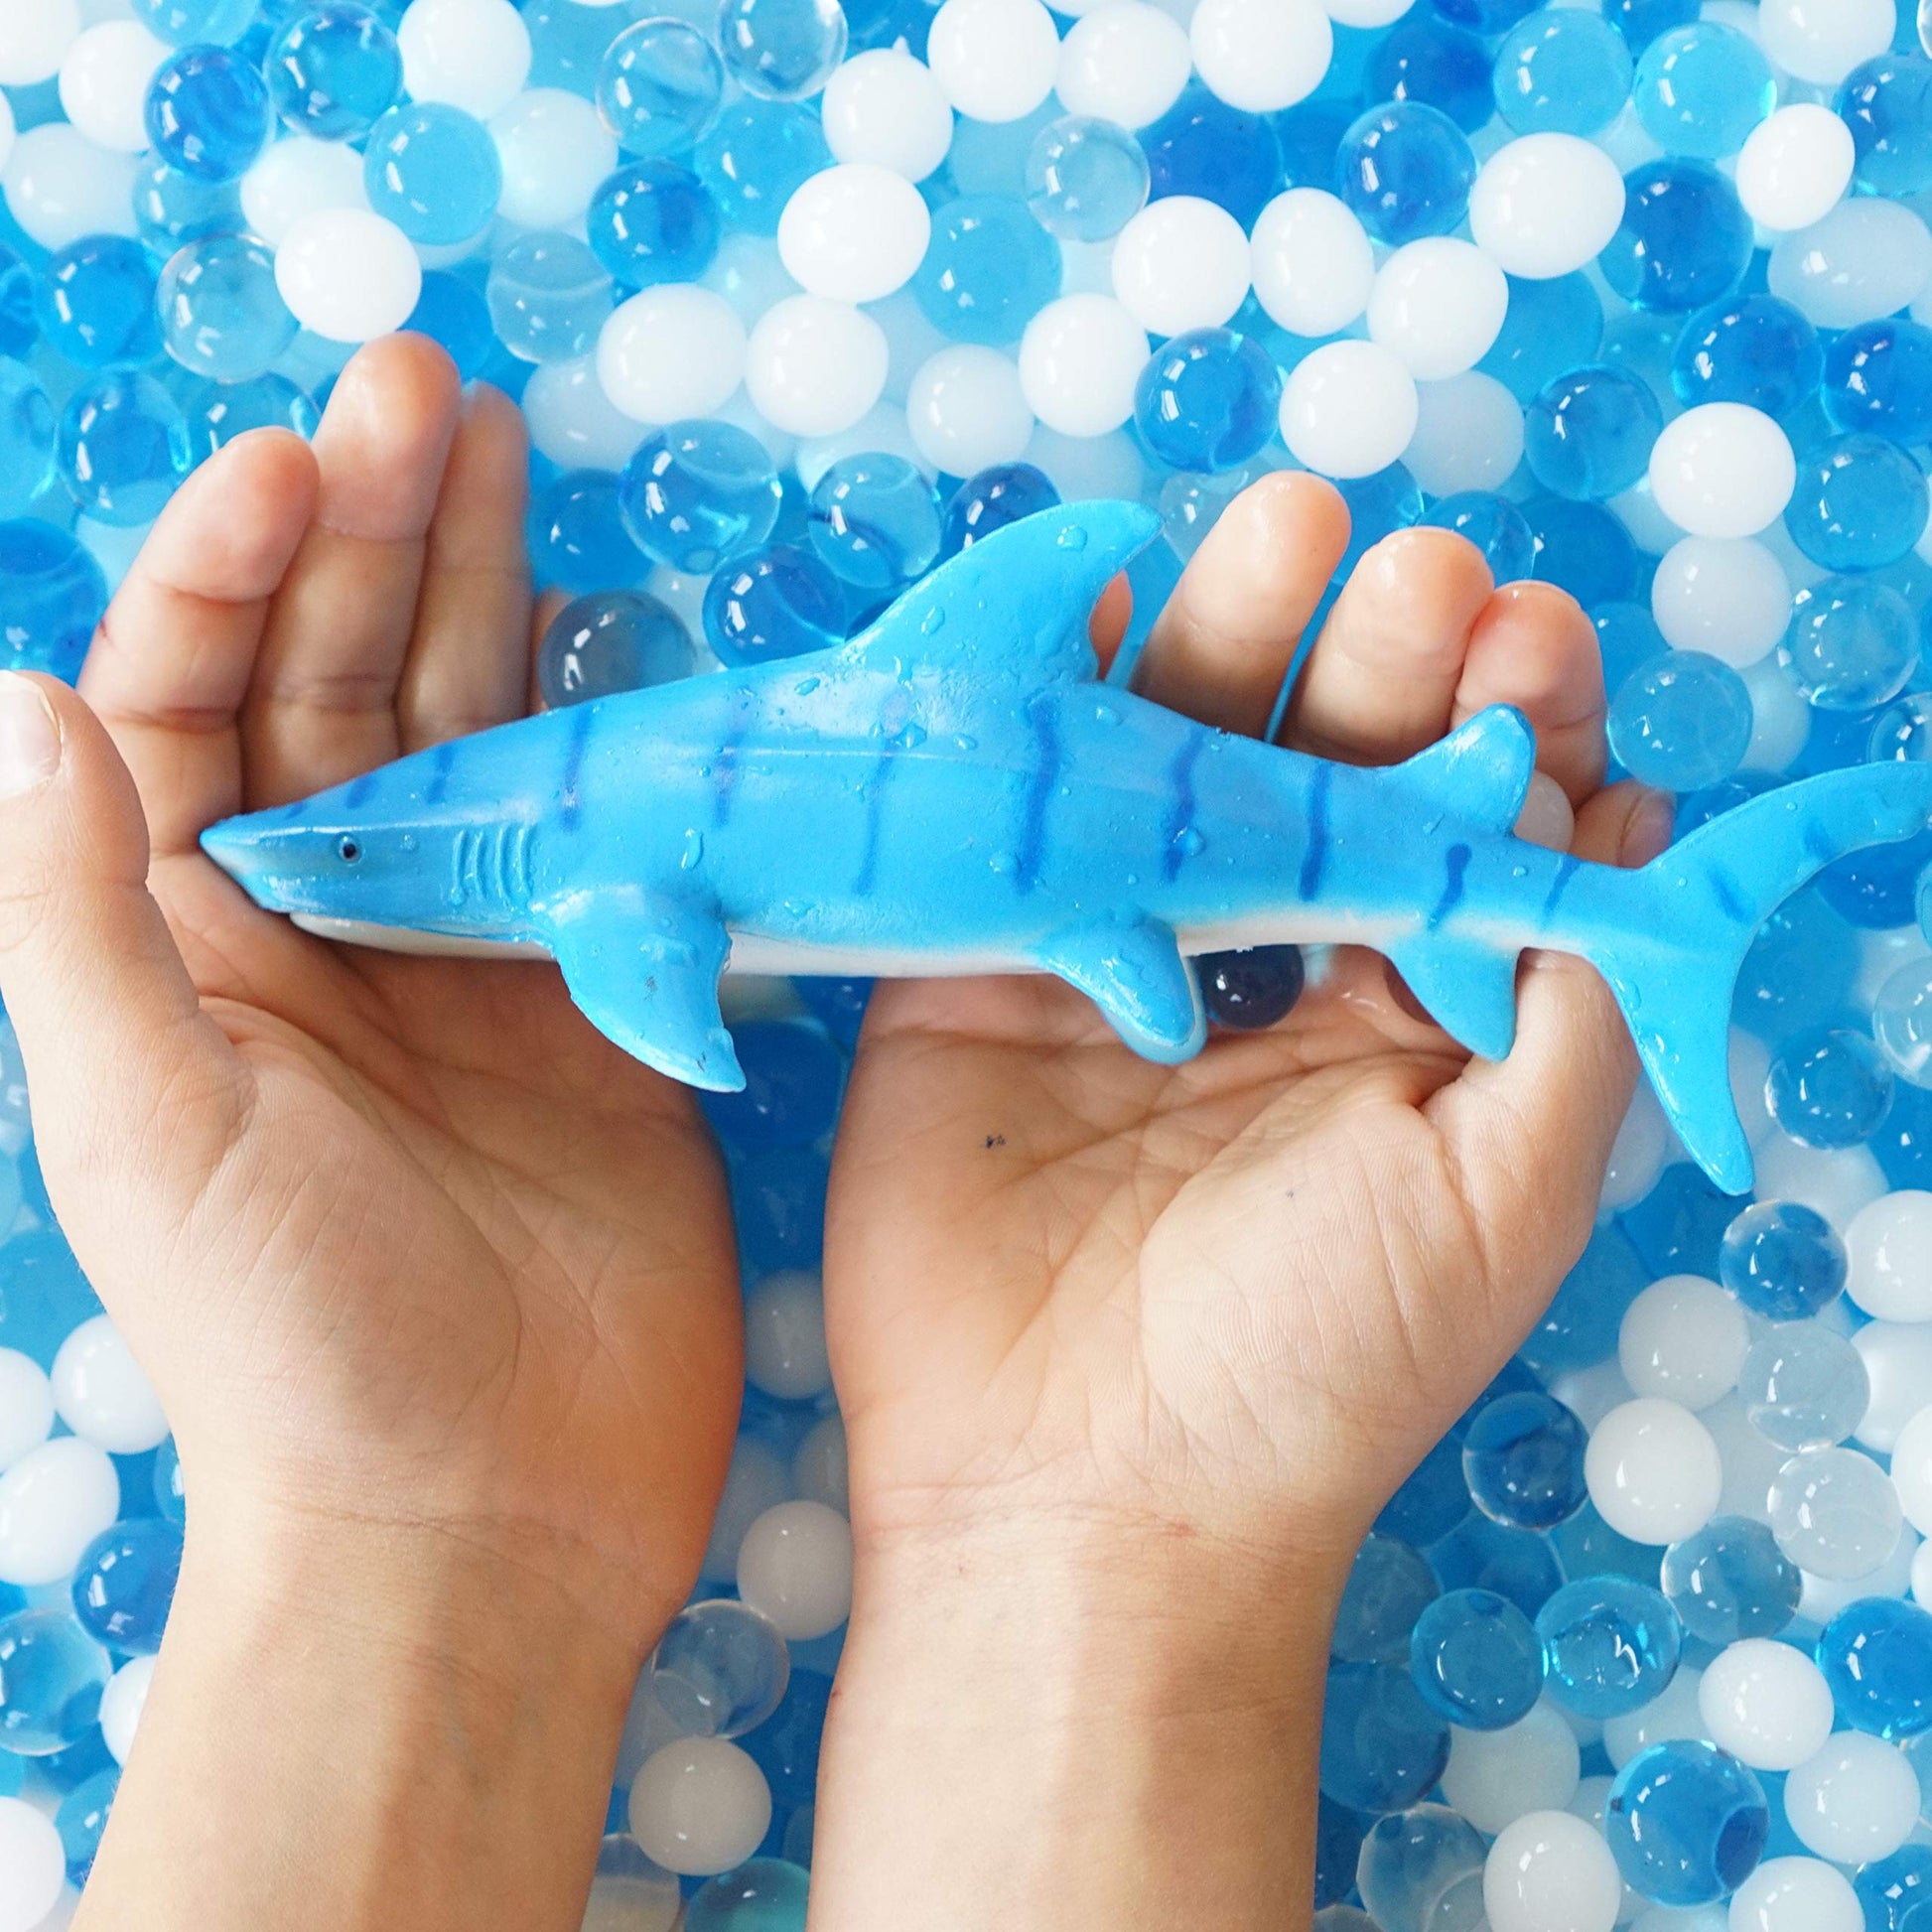 SENSORY4U Ocean Water Beads Swimming with Sharks Sensory Kit - Large Shark Toys Included - Dew Drops Offer Great Fine Motor Skills and Sensory Bin Kit for Kids